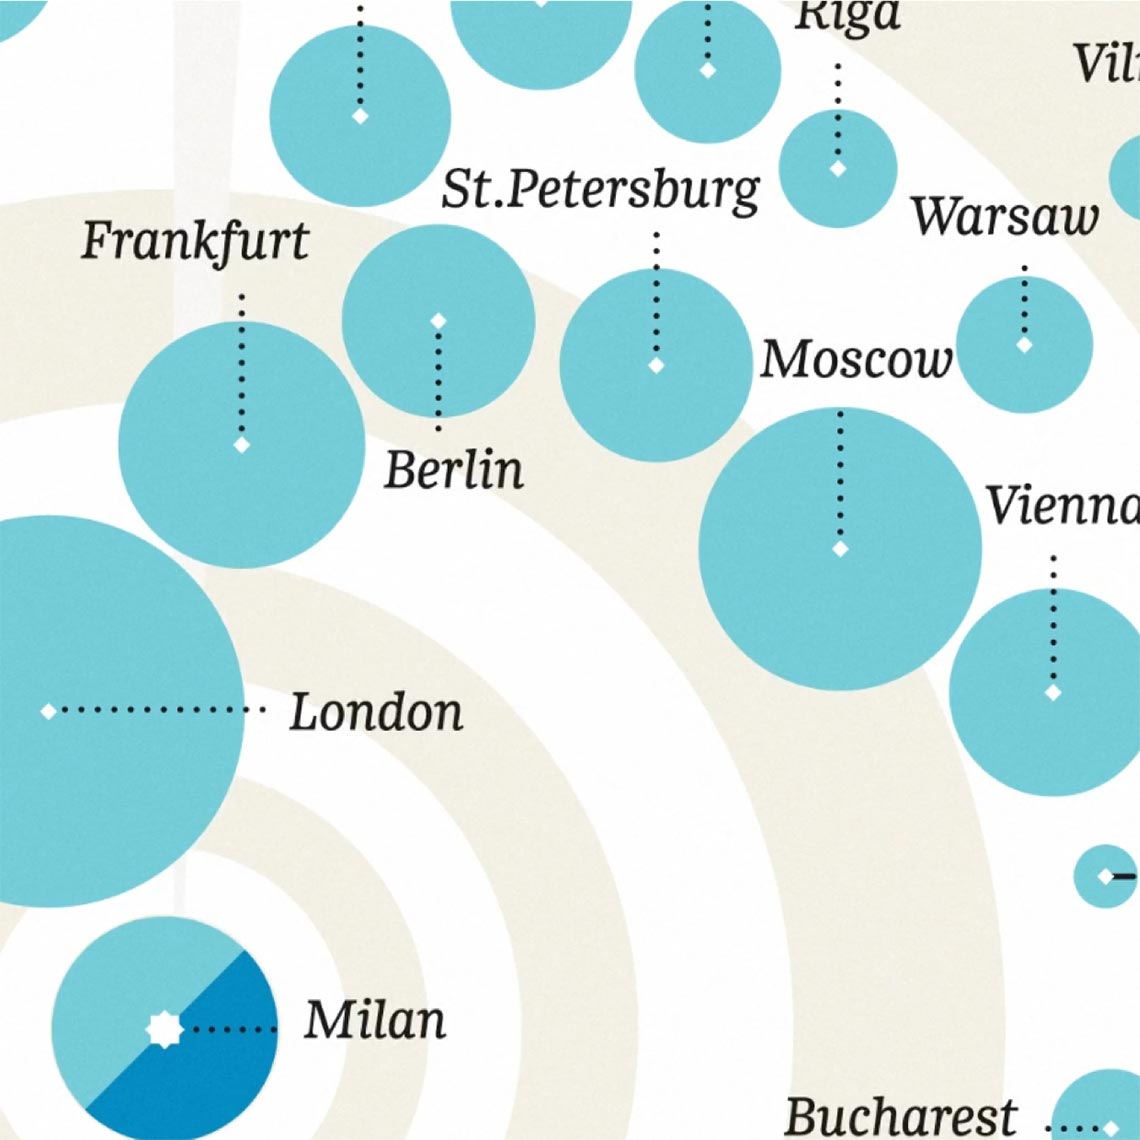 Infographic data visualization with circles on Corriere della Sera